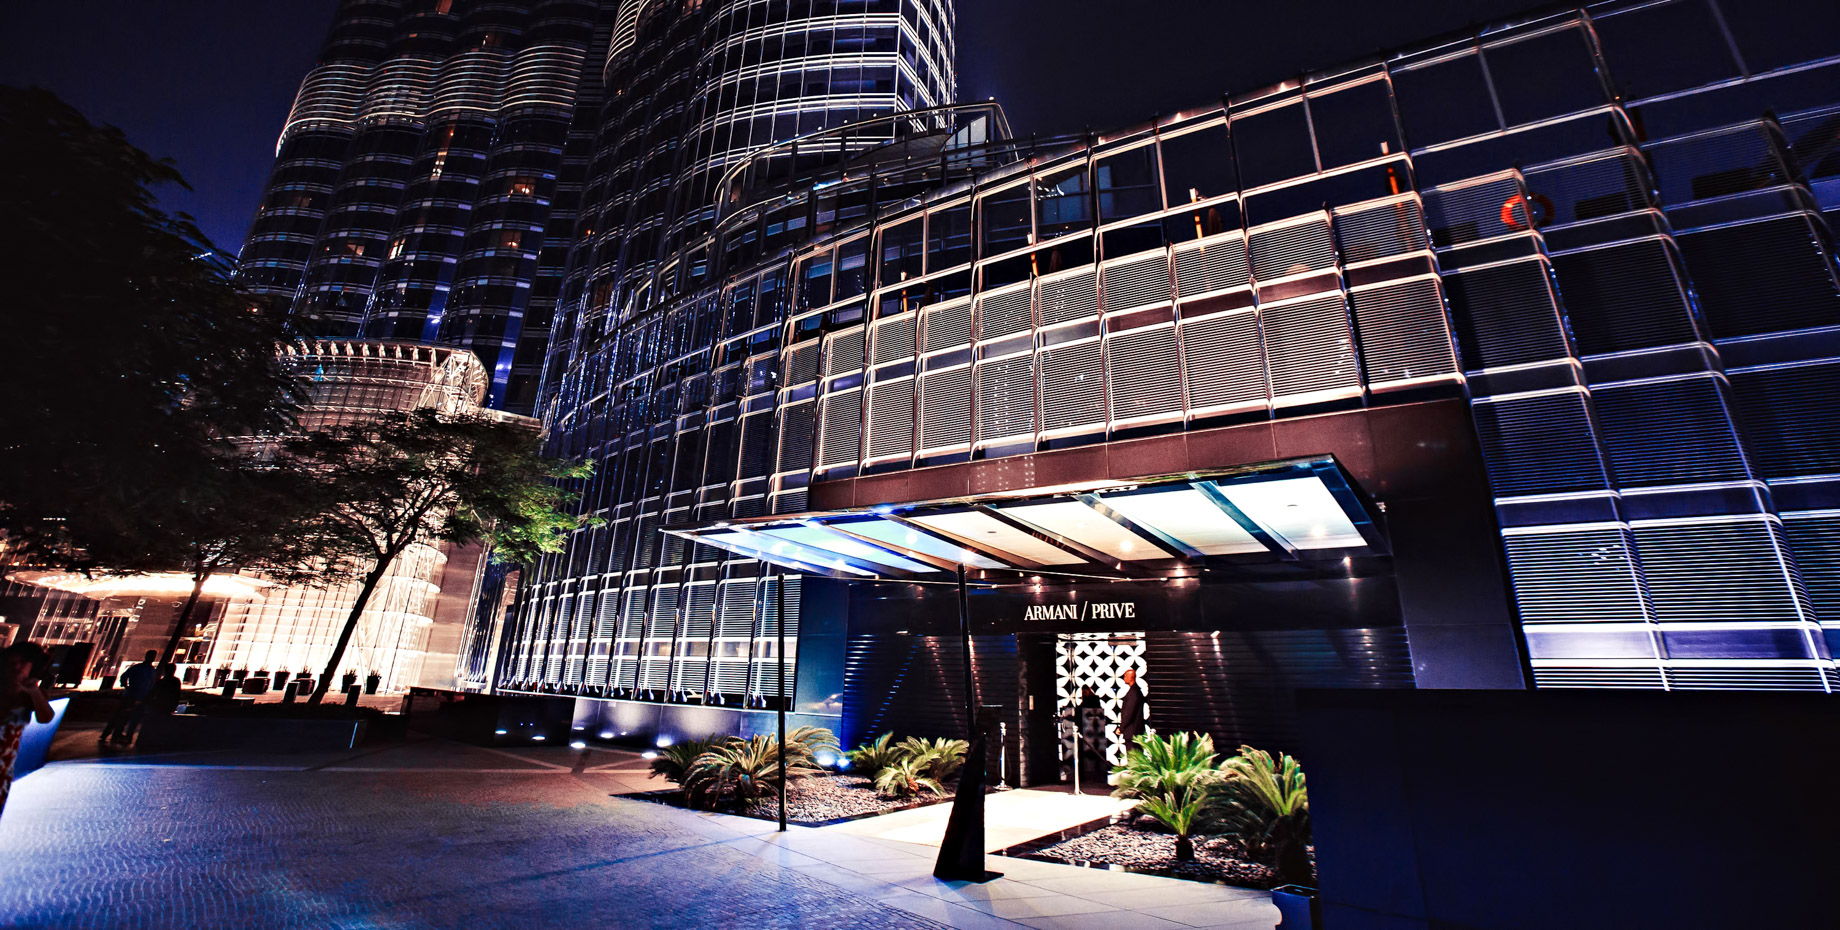 Armani Hotel Dubai – Burj Khalifa, Dubai, UAE – Burj Khalifa Armani Prive Night Club